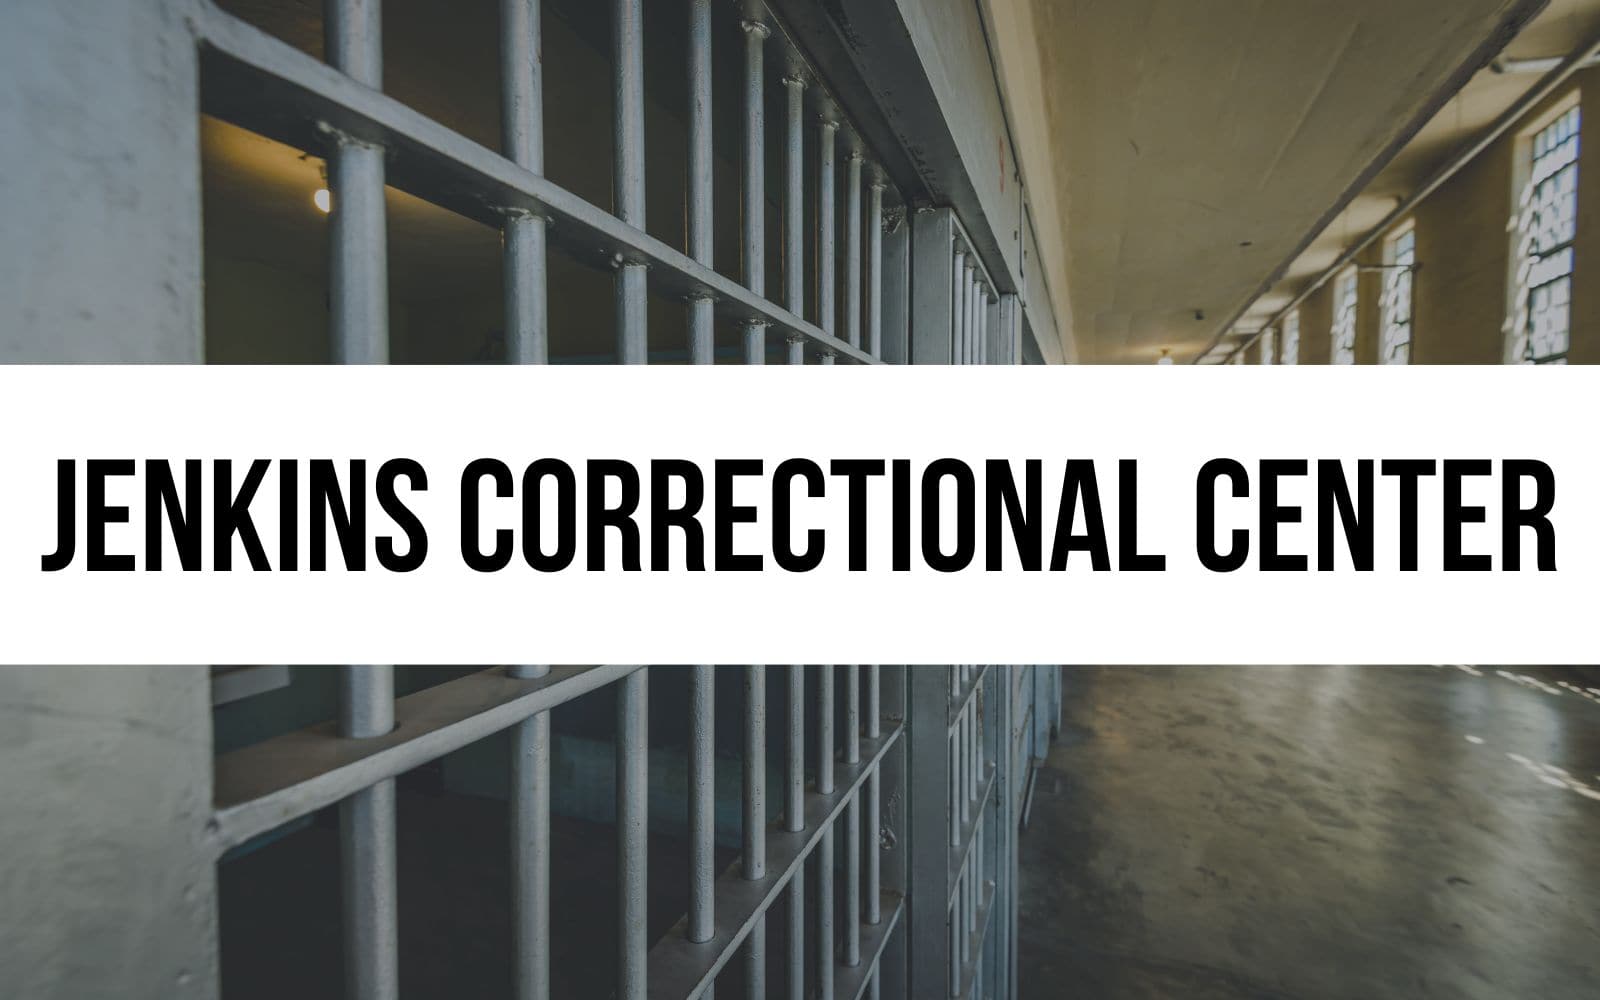 Jenkins Correctional Center